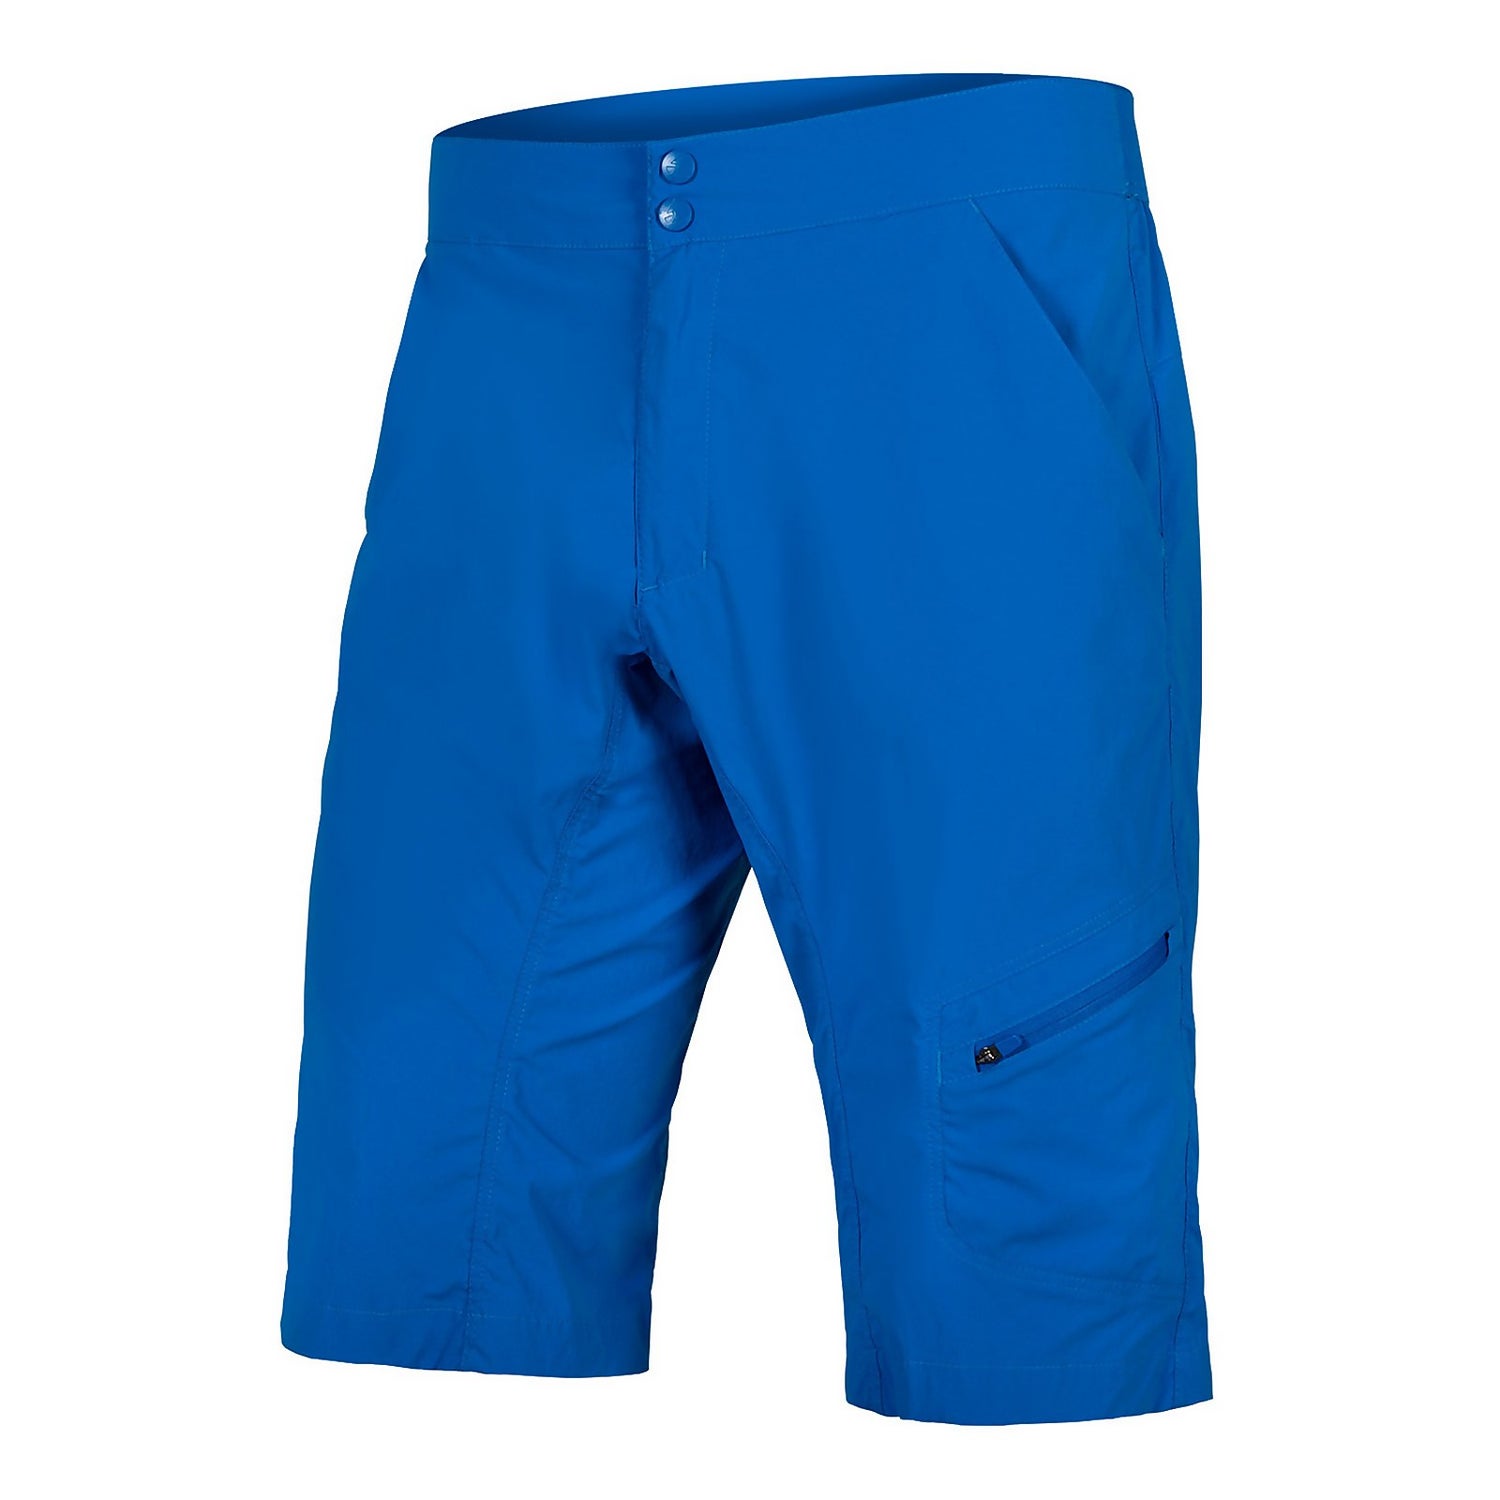 Men's Hummvee Lite Short with Liner - Azure Blue